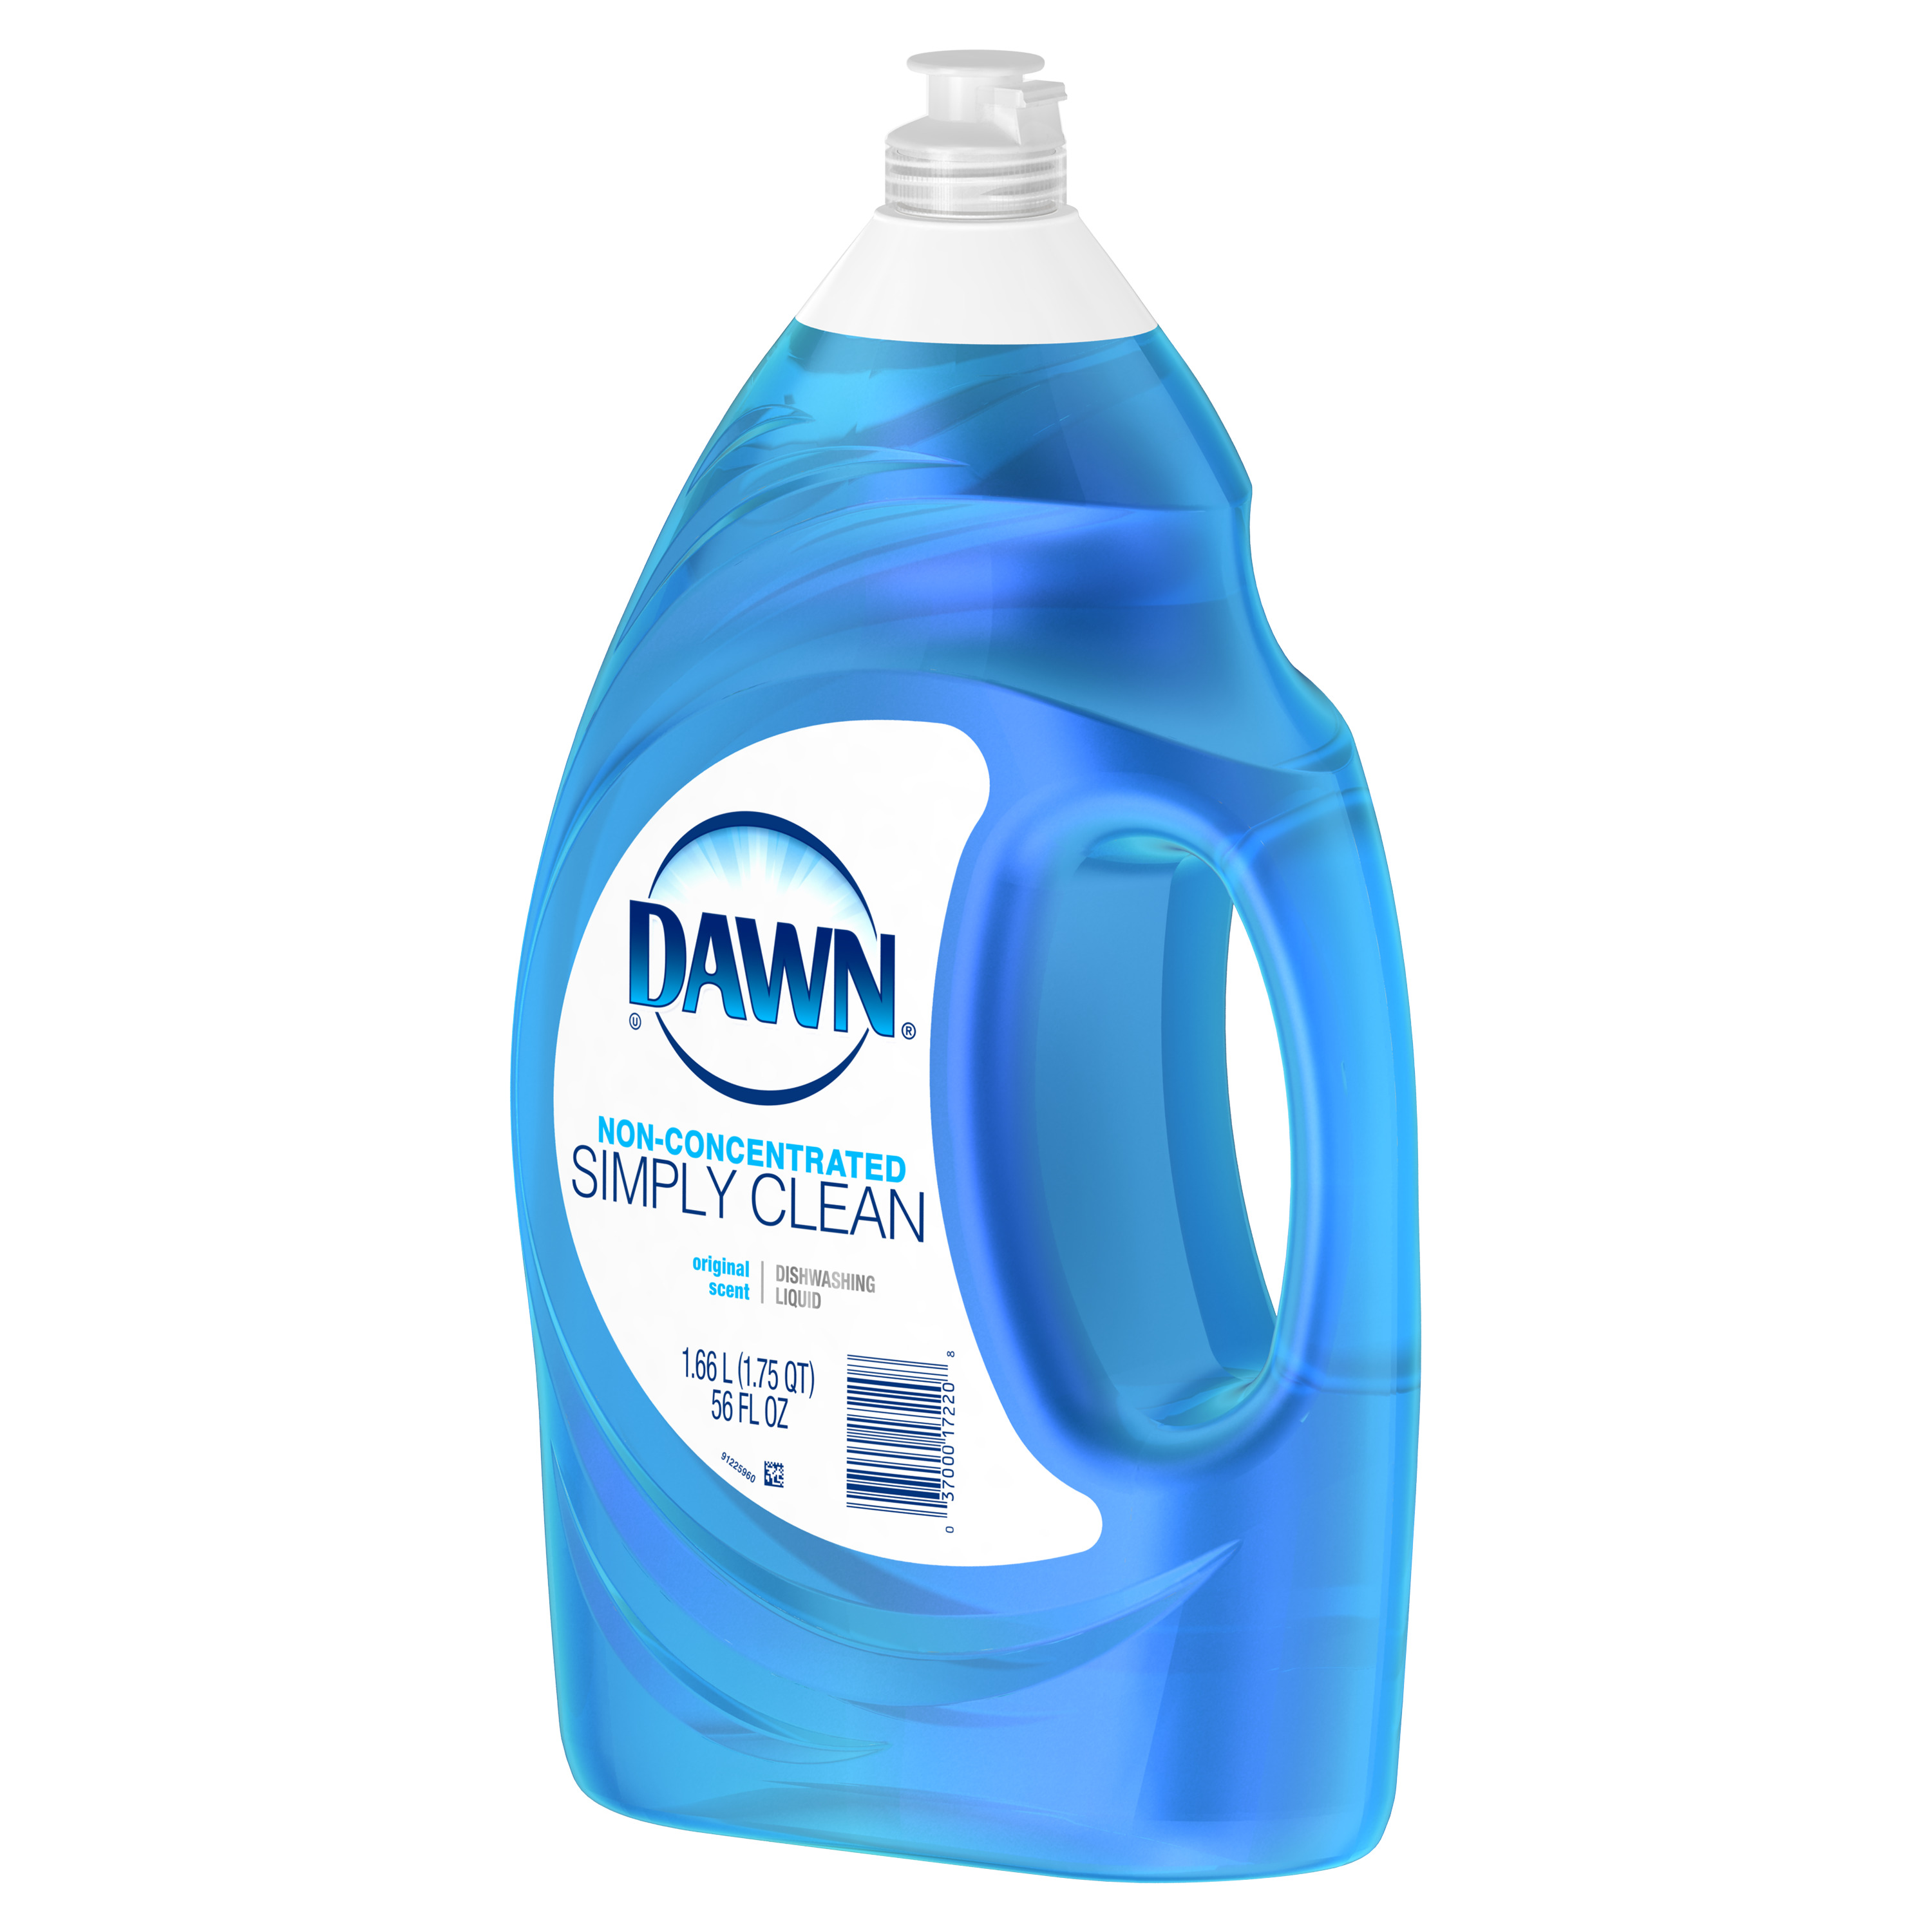 Dawn Simply Clean Dishwashing Liquid Dish Soap, Original Scent, 56 fl oz - image 3 of 5